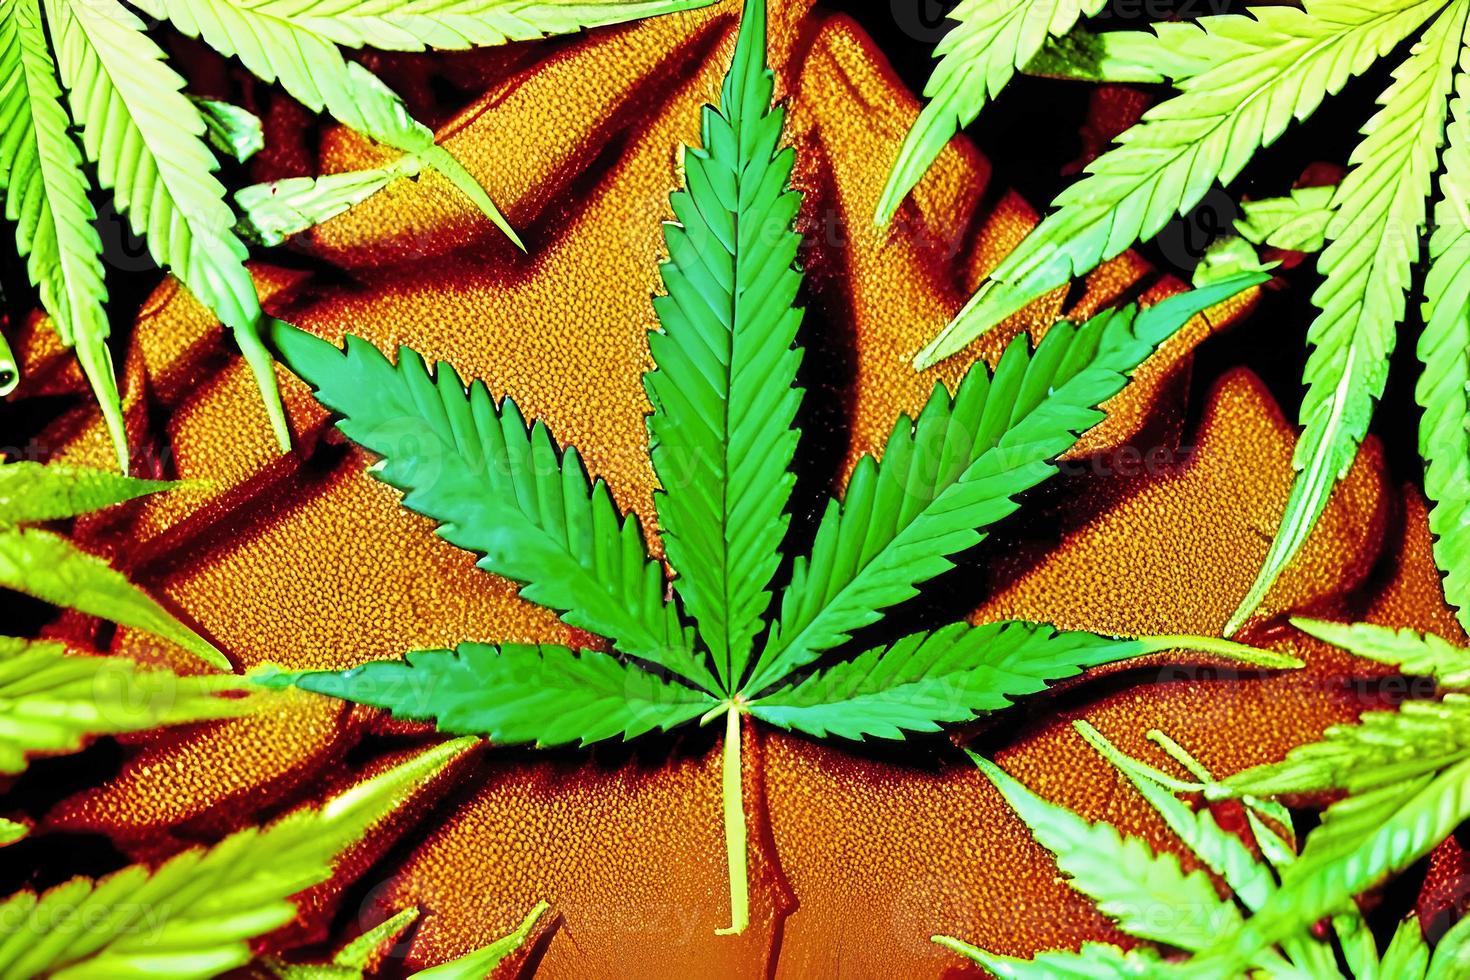 marihuana blad, generatief ai foto